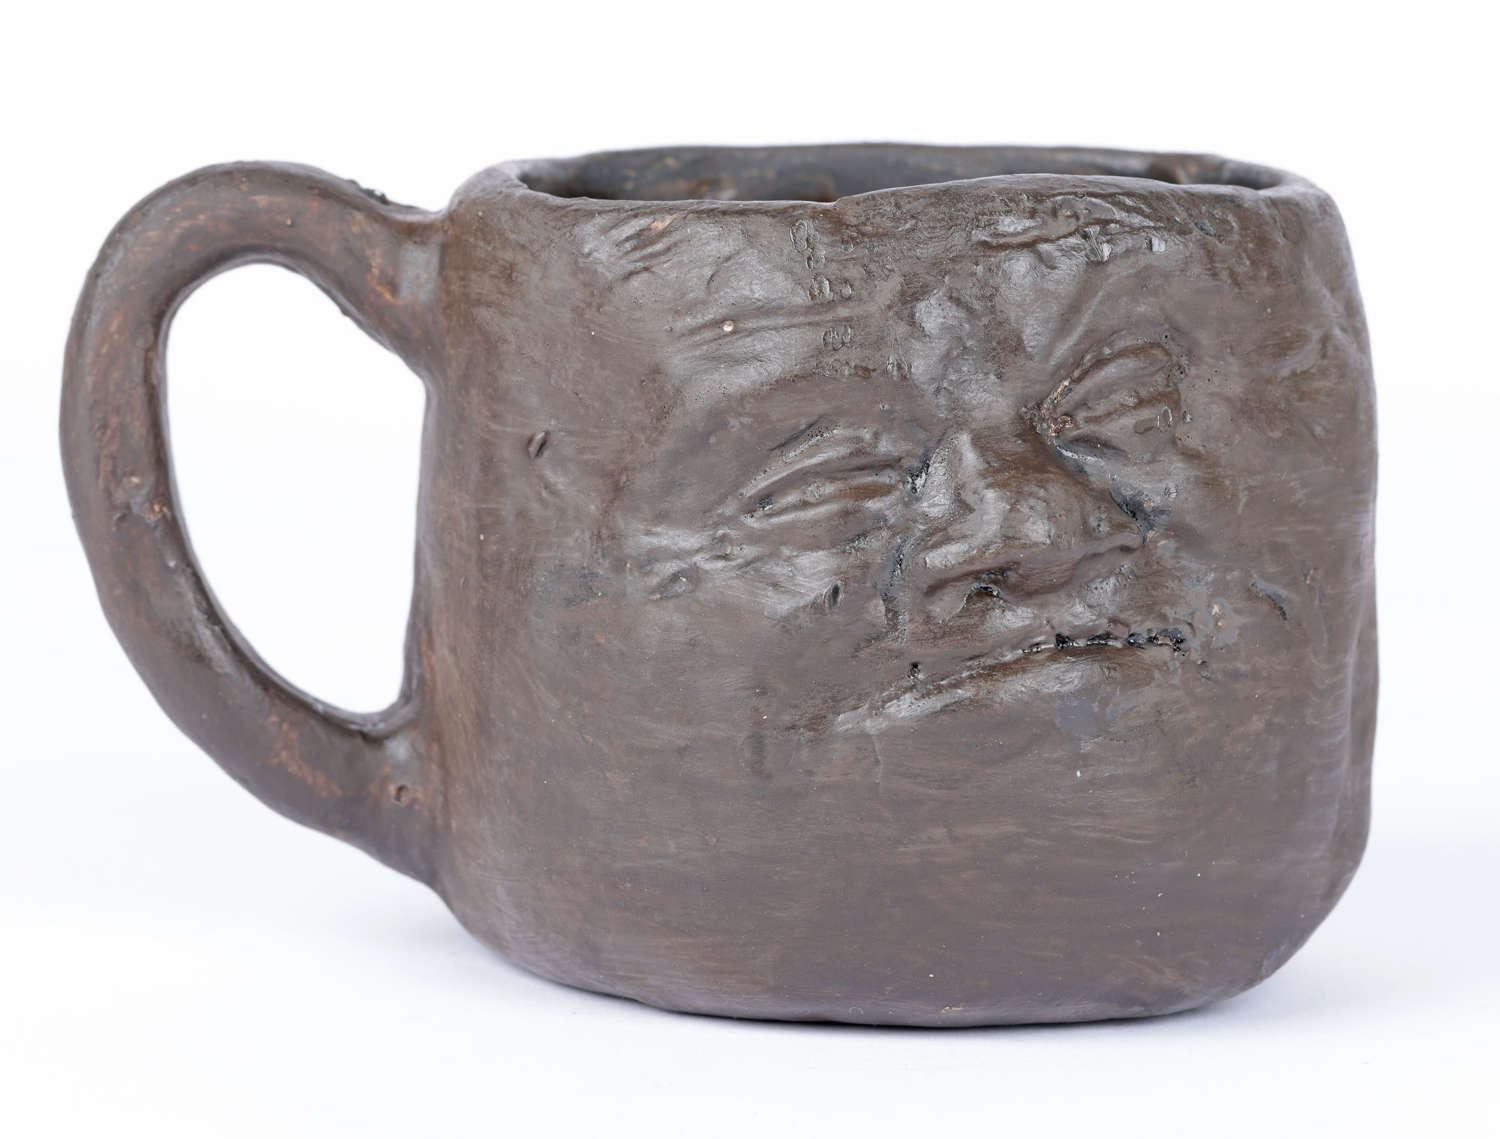 Martin Brothers Early Unglazed Black Pottery Double Face Mug